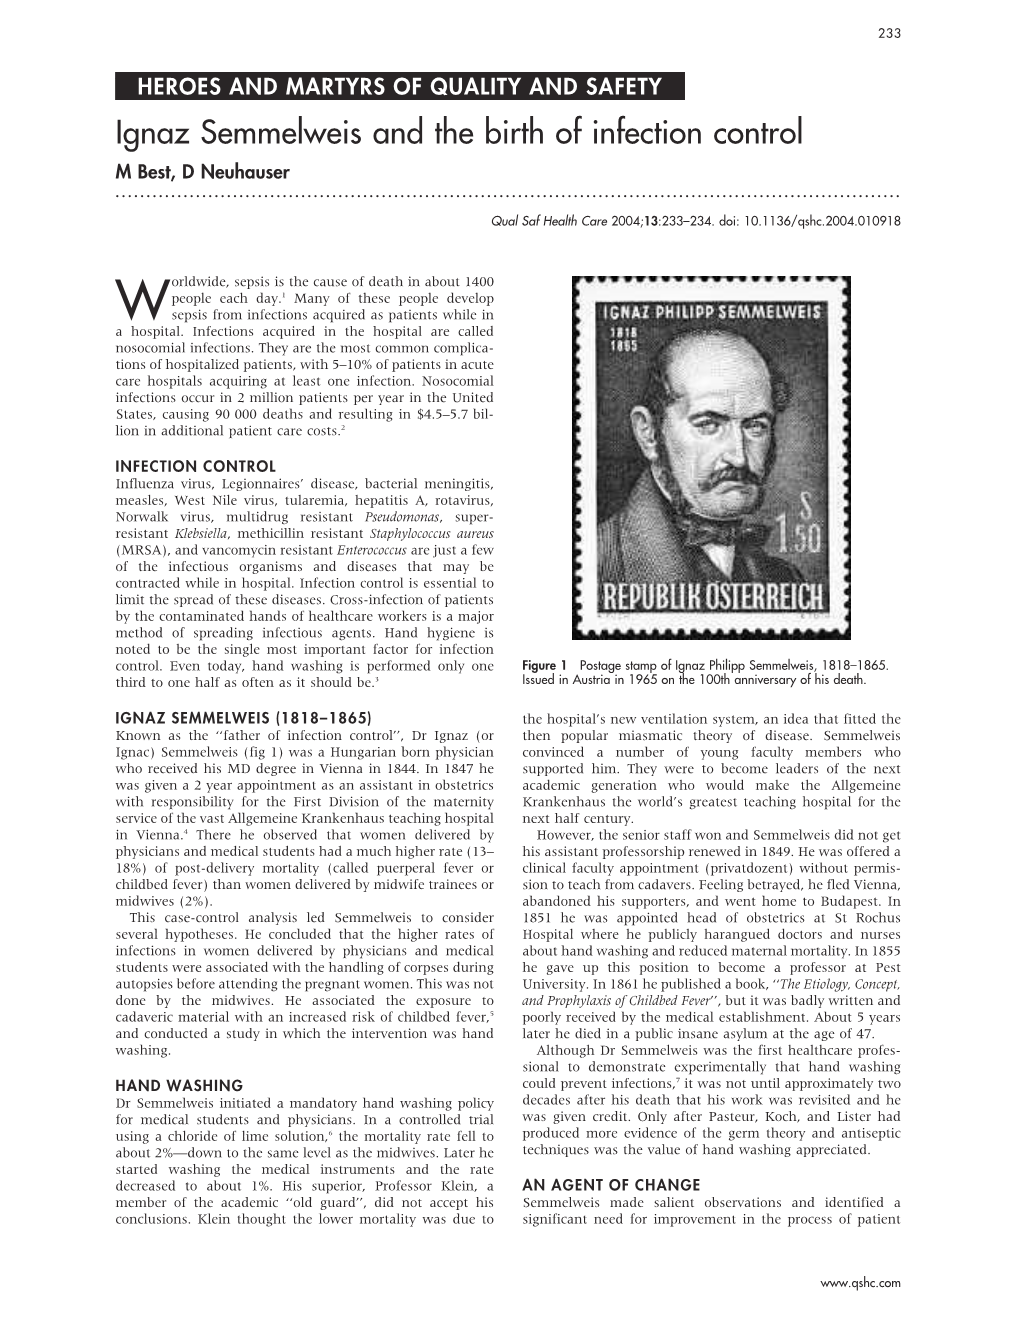 Ignaz Semmelweis and the Birth of Infection Control M Best, D Neuhauser